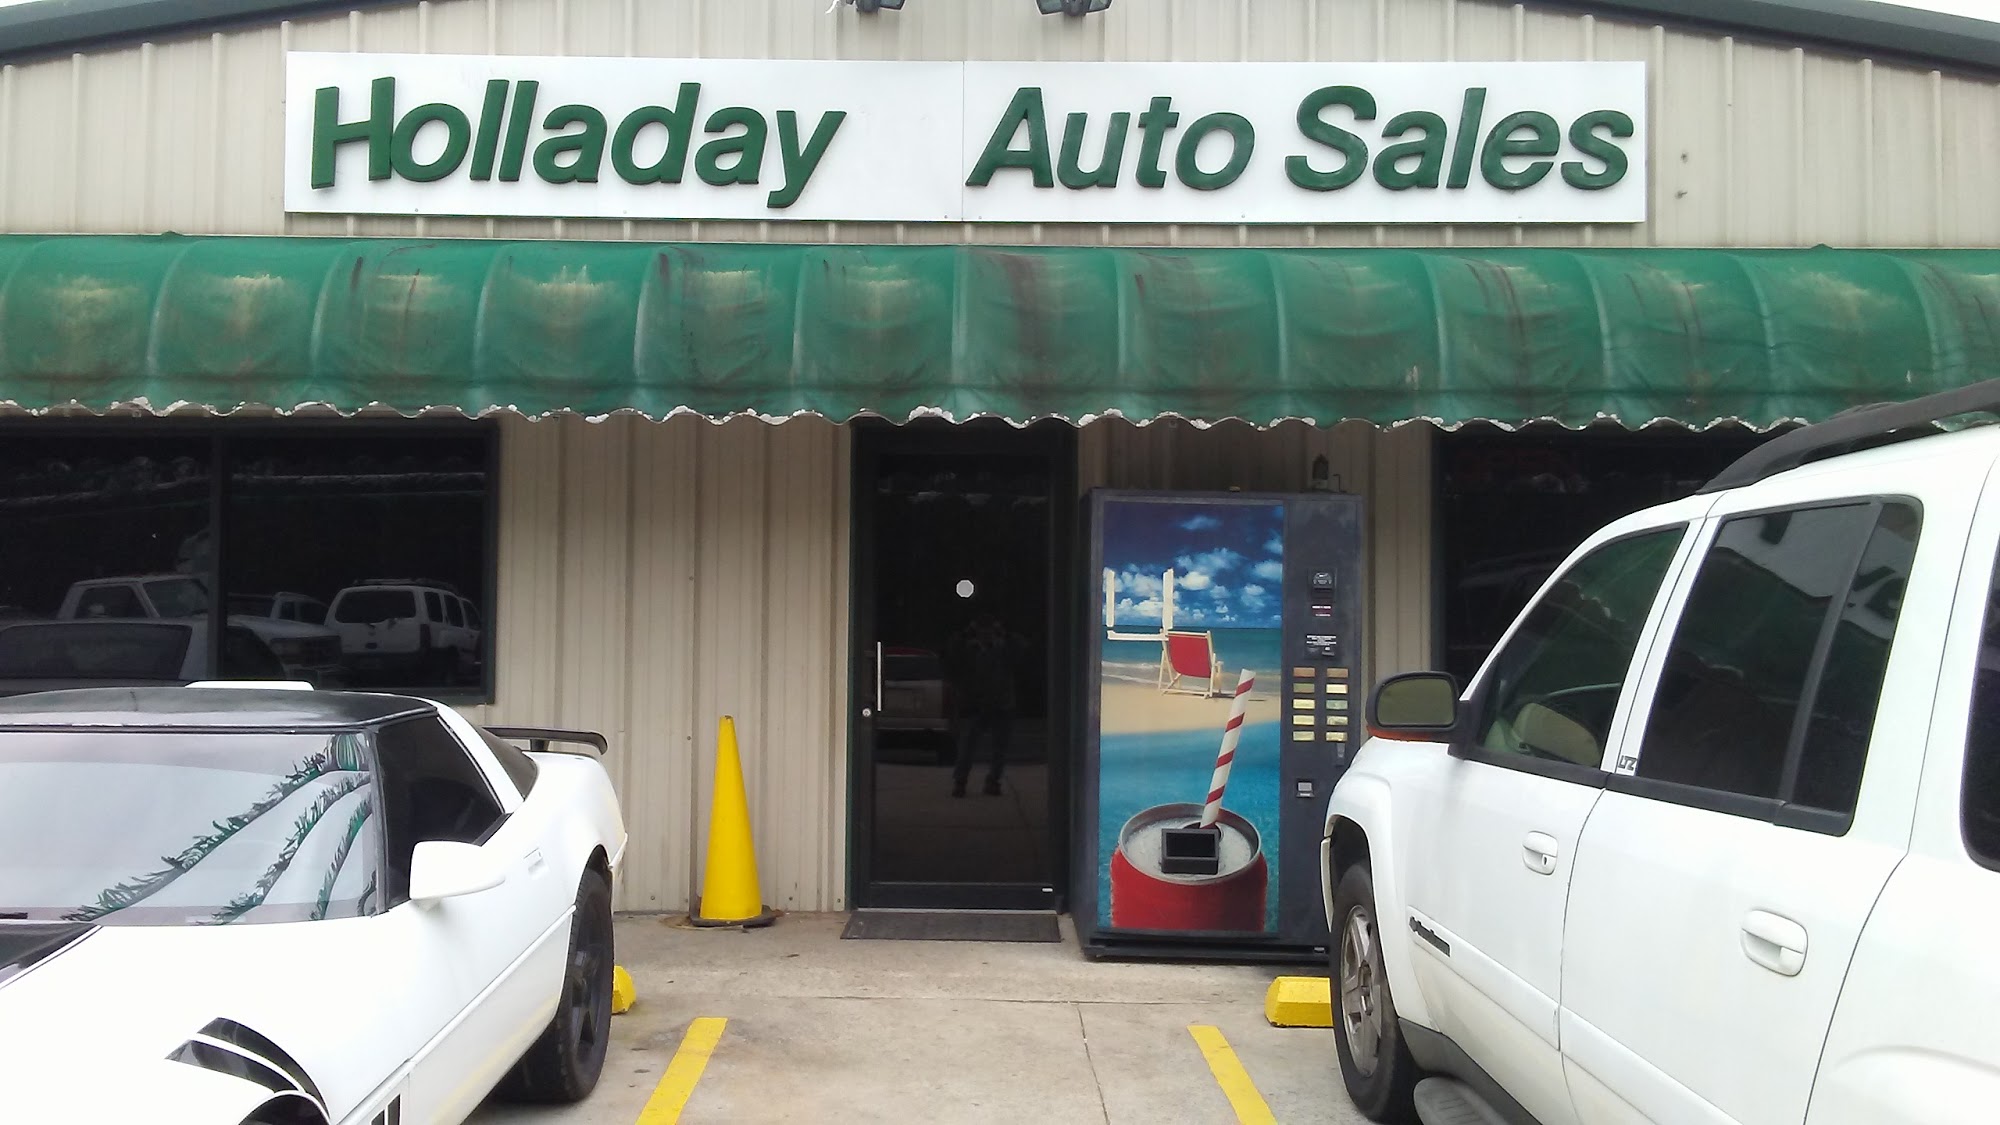 Holiday Auto Sales